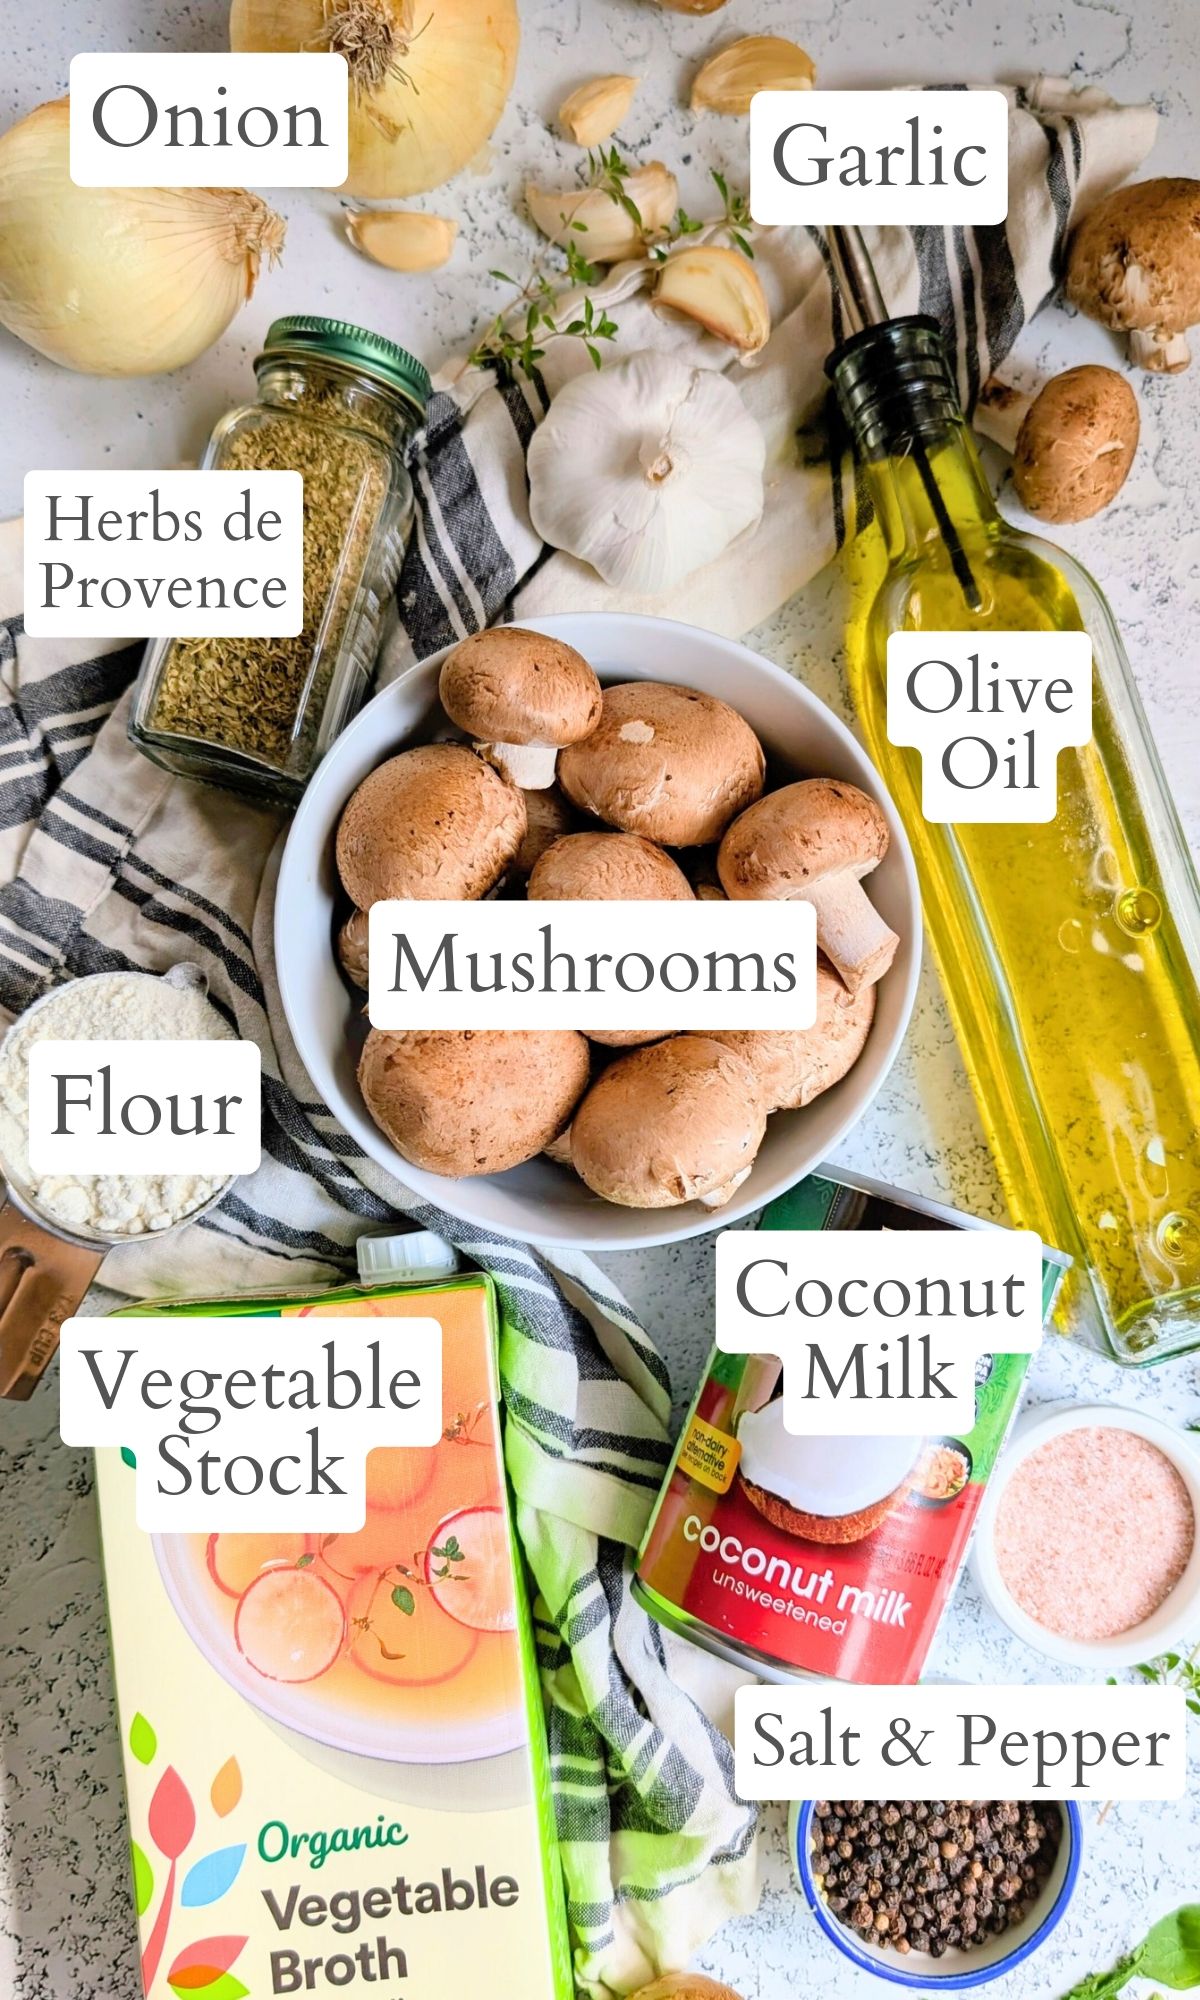 ingredints for coconut milk cream of mushroom soup like herbs de provence, coconut milk, vegetable stock, mushrooms, salt, and parsley.